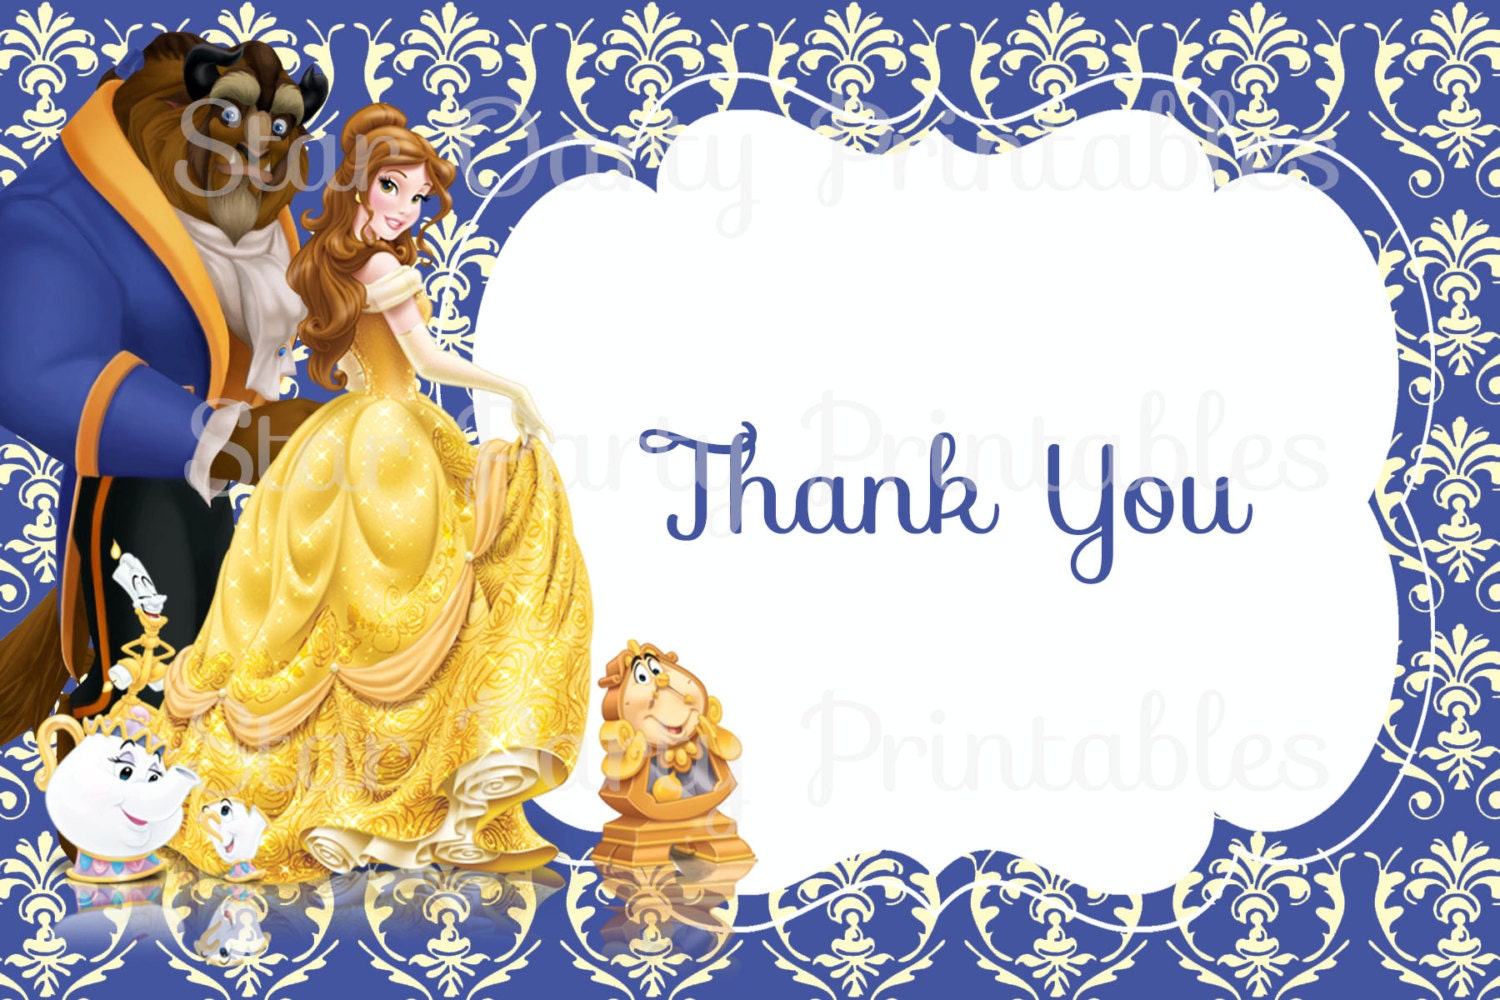 Belle Beauty & the Beast Thank you card Disney Princess